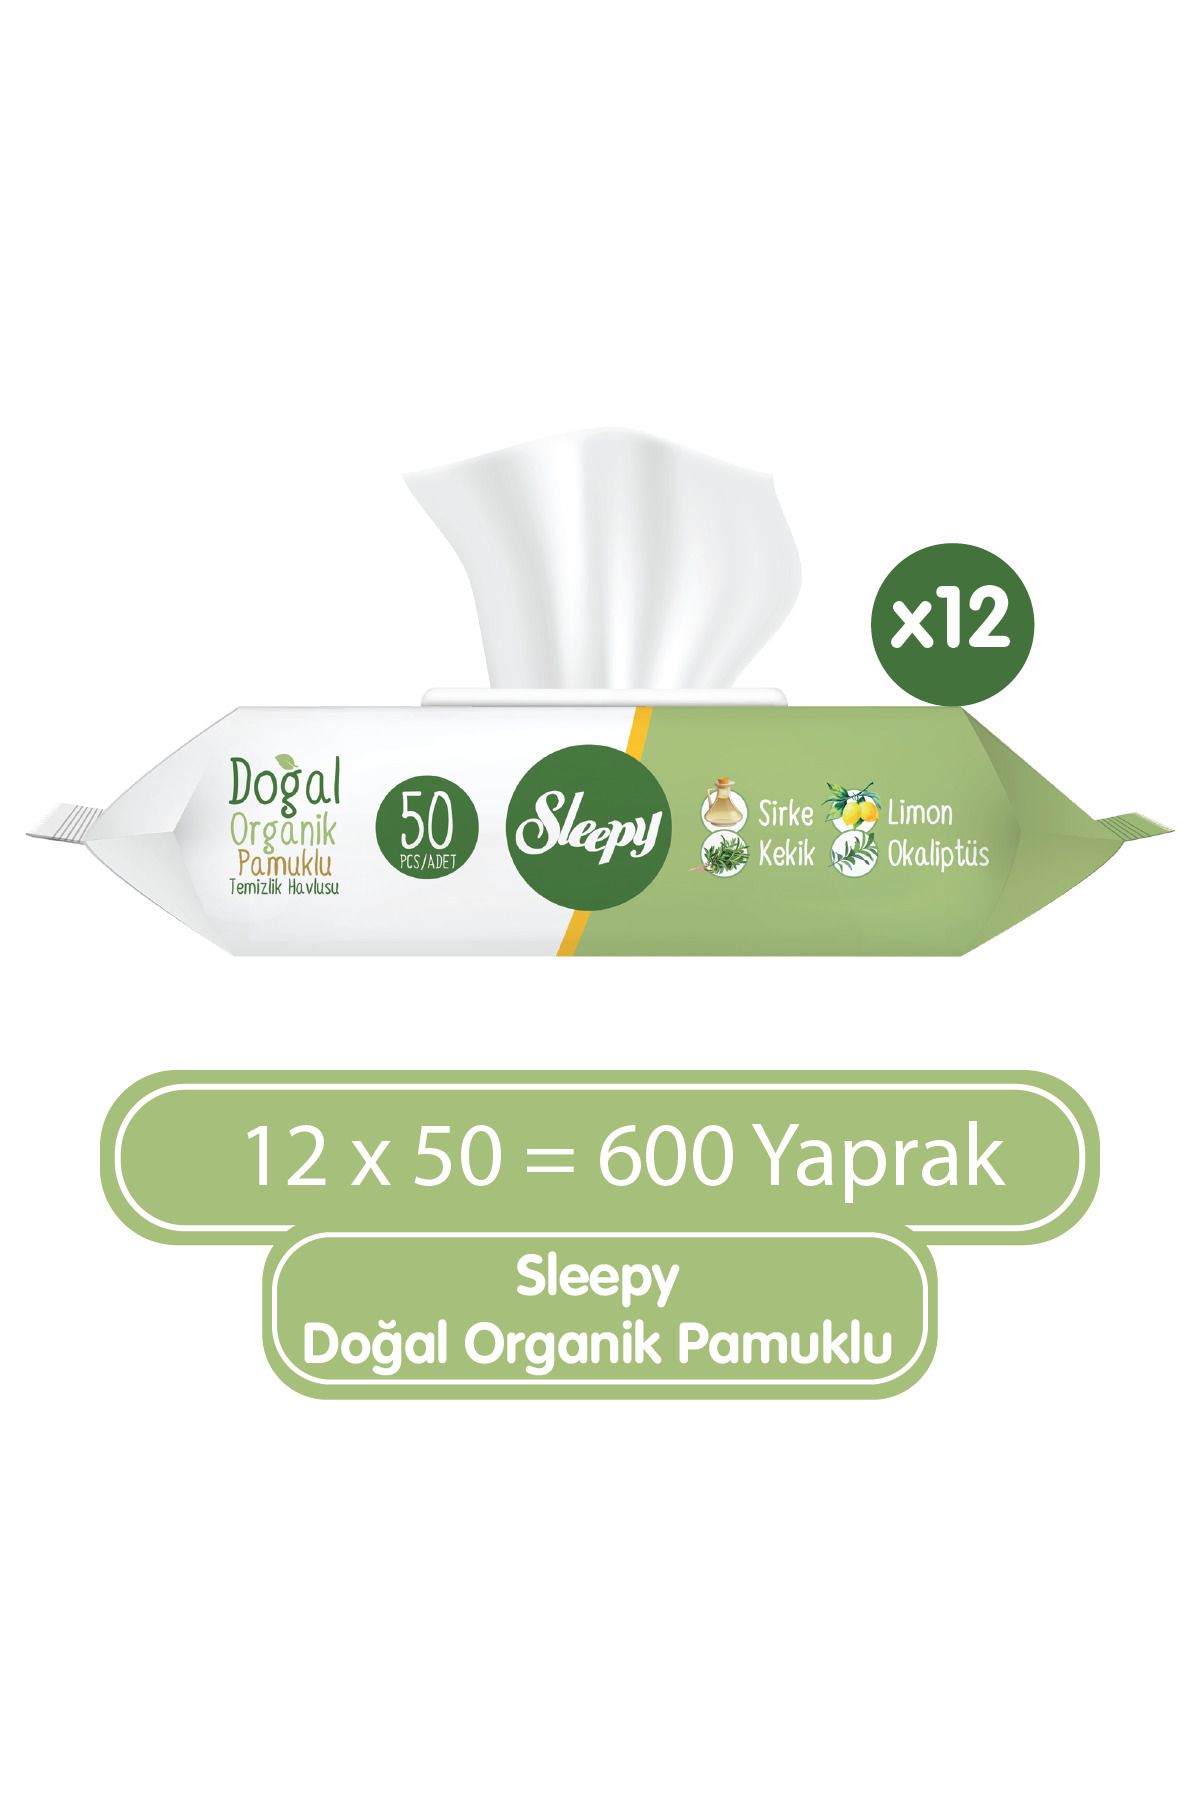 Sleepy Doğal Organik Pamuklu Temizlik Havlusu 12x50